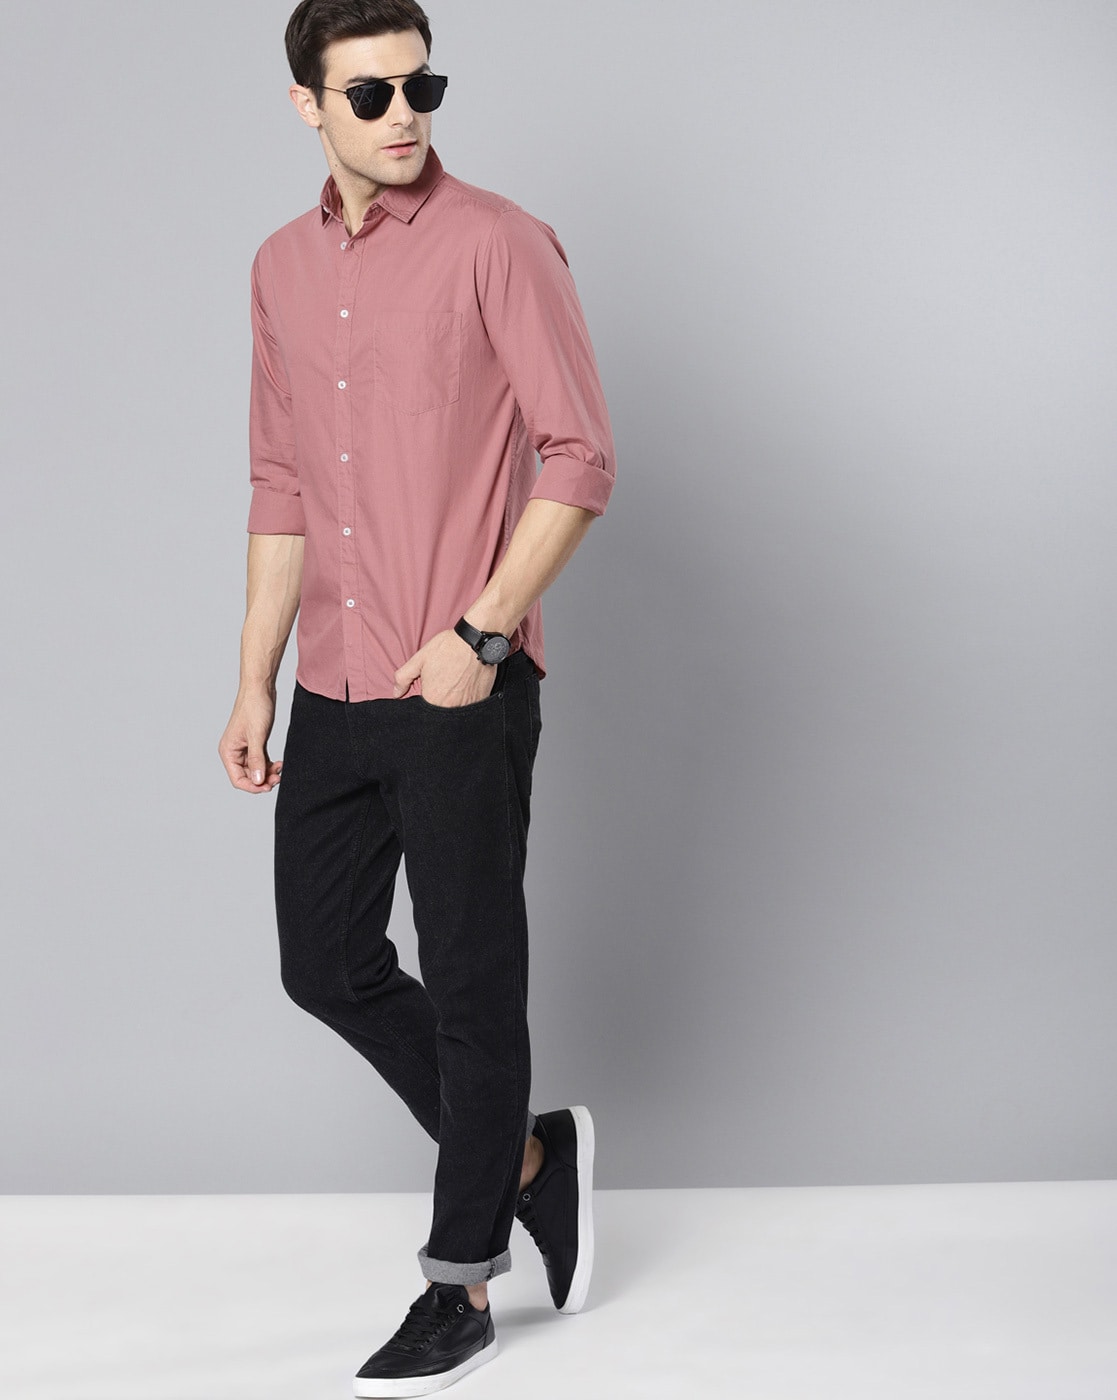 Men's Cotton Maroon Half sleeves Casual Shirt | Casual shirts, Khaki pants  men, Maroon shirts